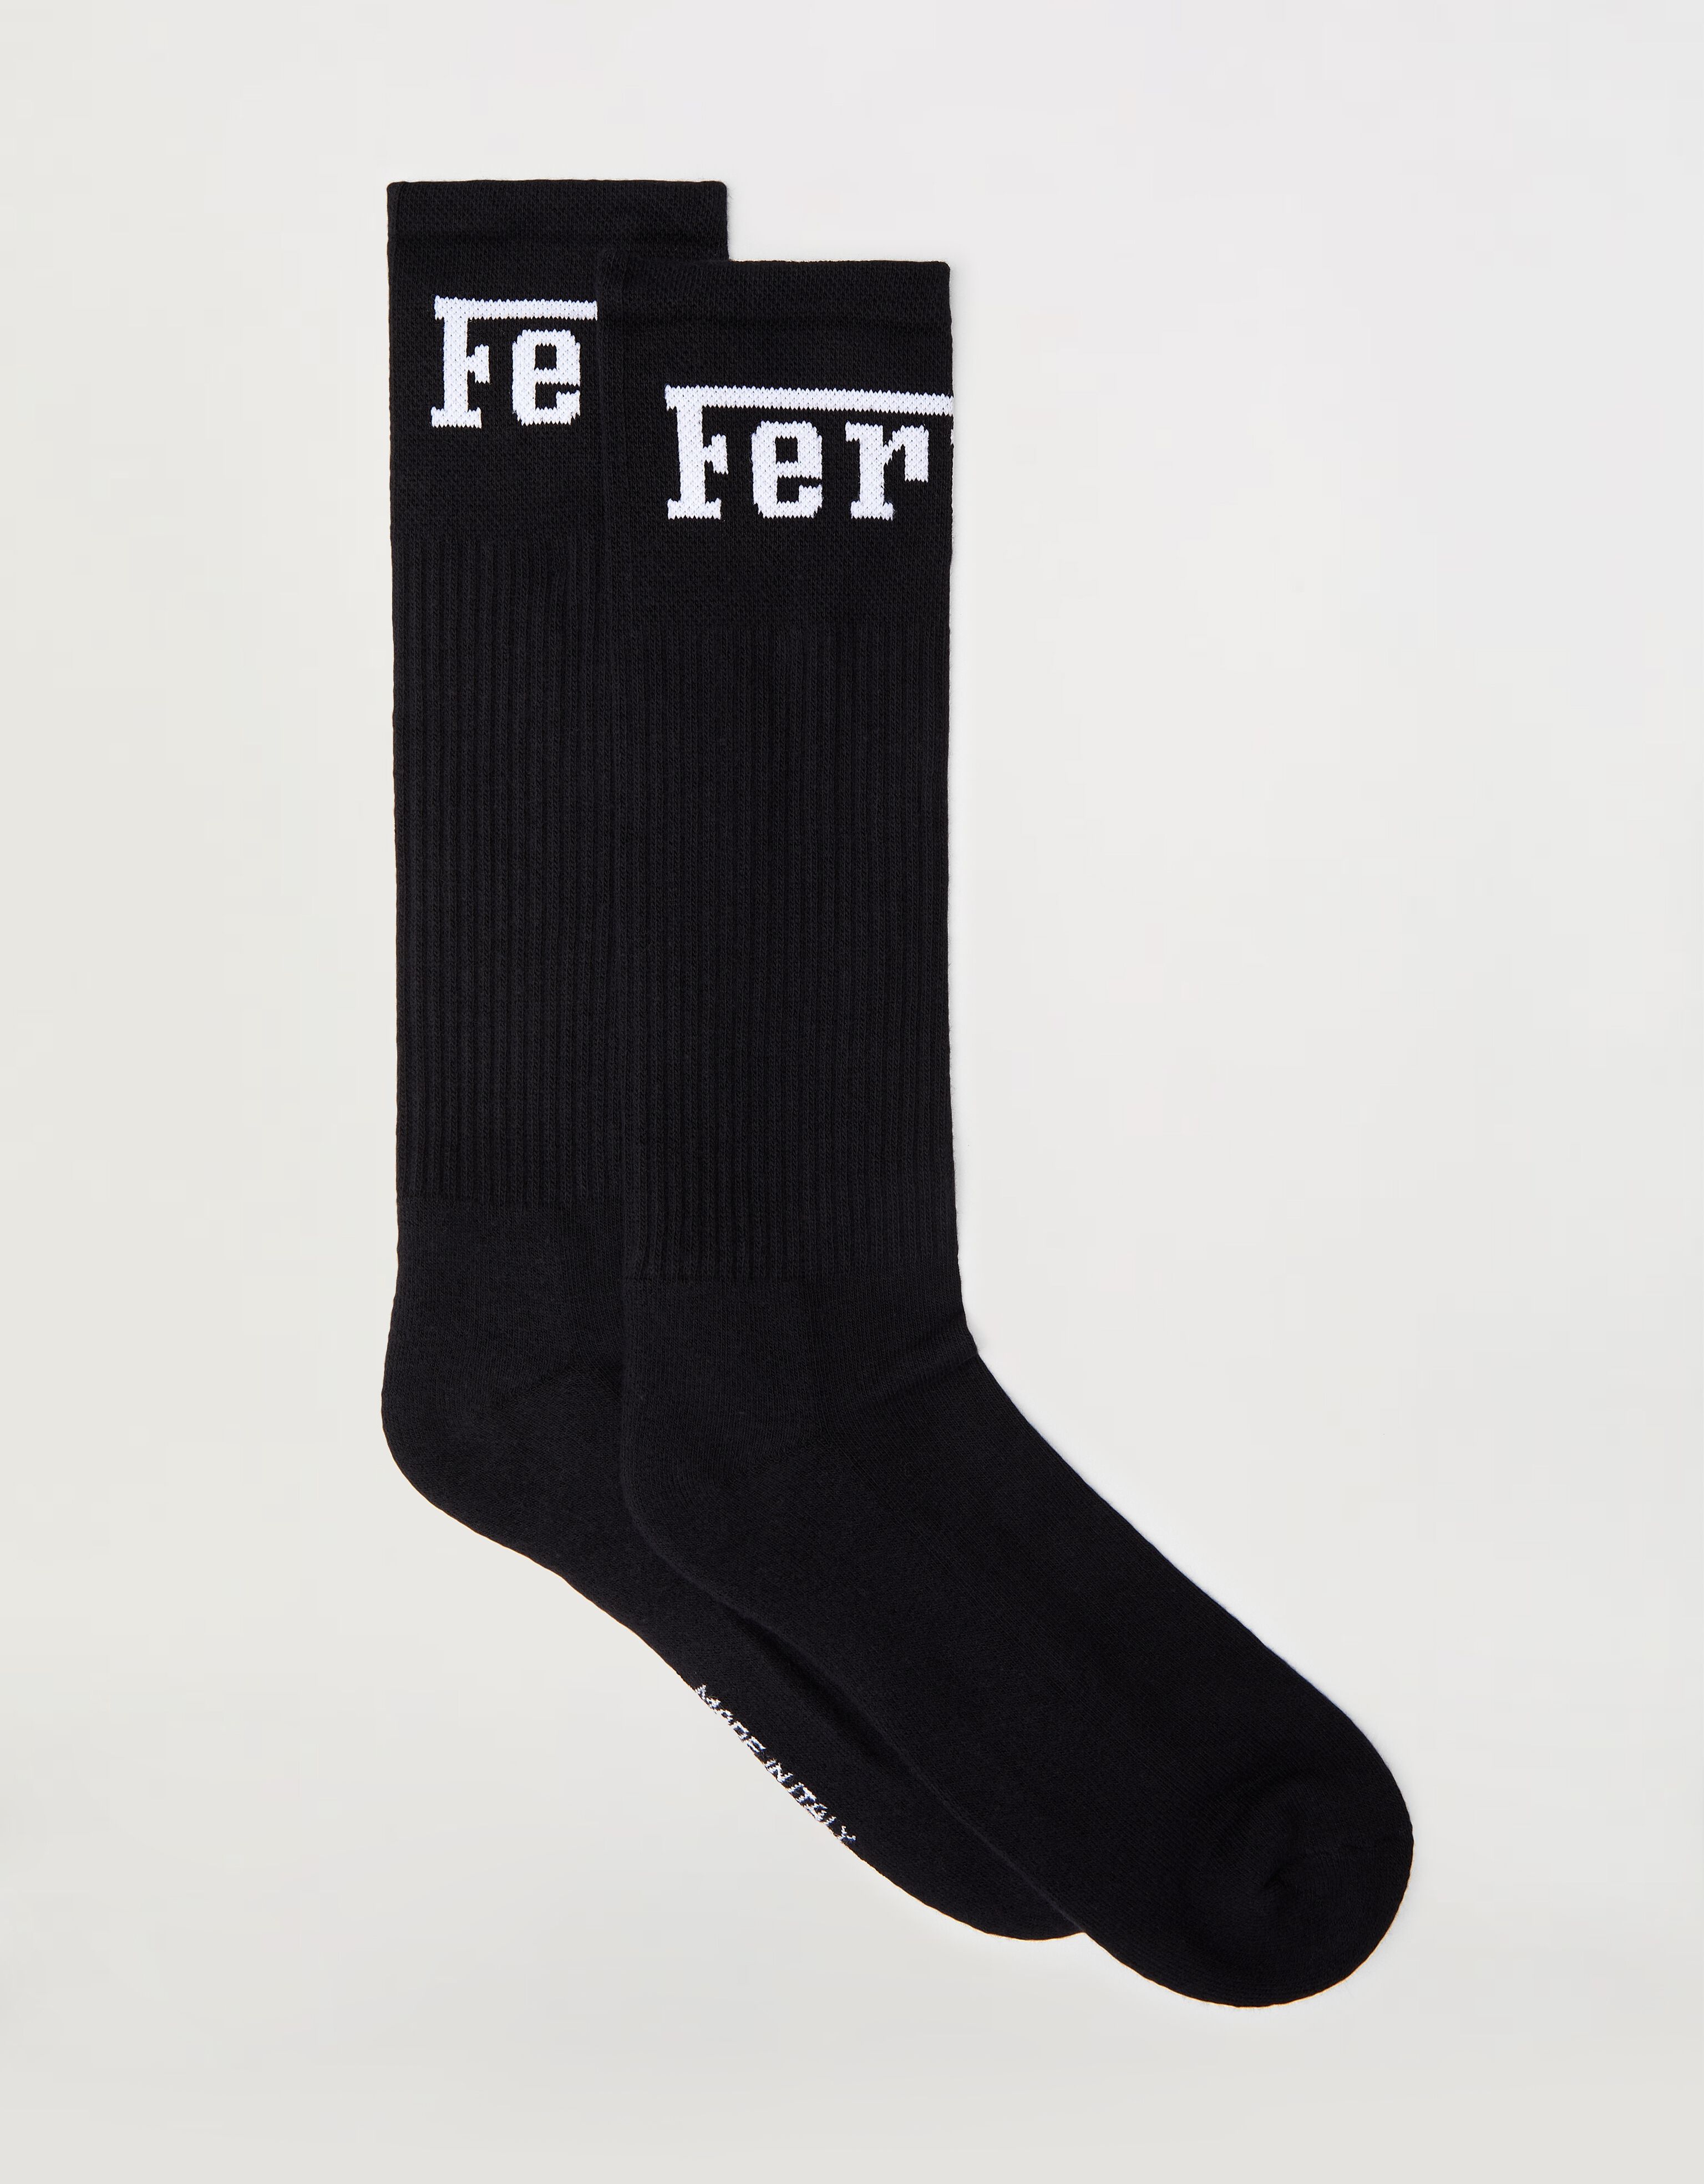 Ferrari Cotton blend socks with Ferrari logo Black 20007f